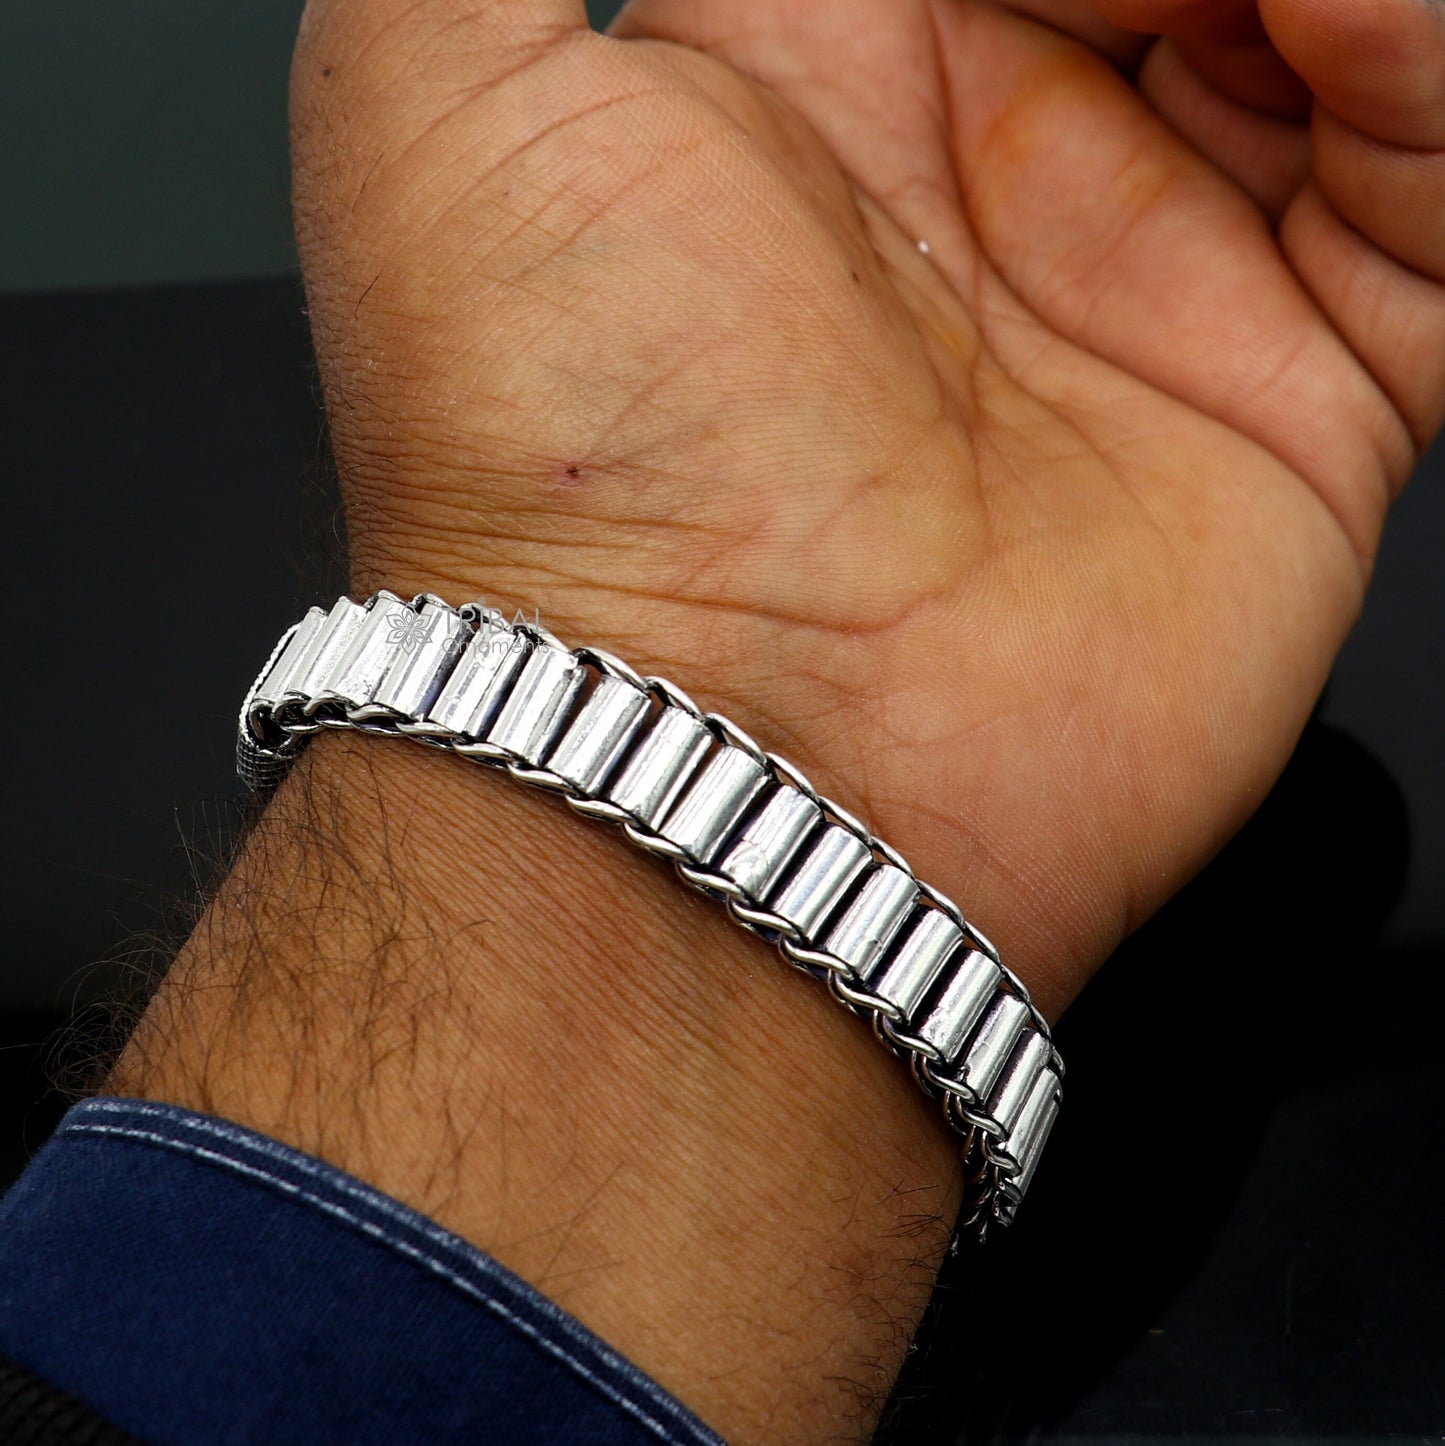 11mm  925 sterling silver handmade amazing rolar bracelet chain flexible men's bracelet jewelry from Rajasthan india sbr731 - TRIBAL ORNAMENTS